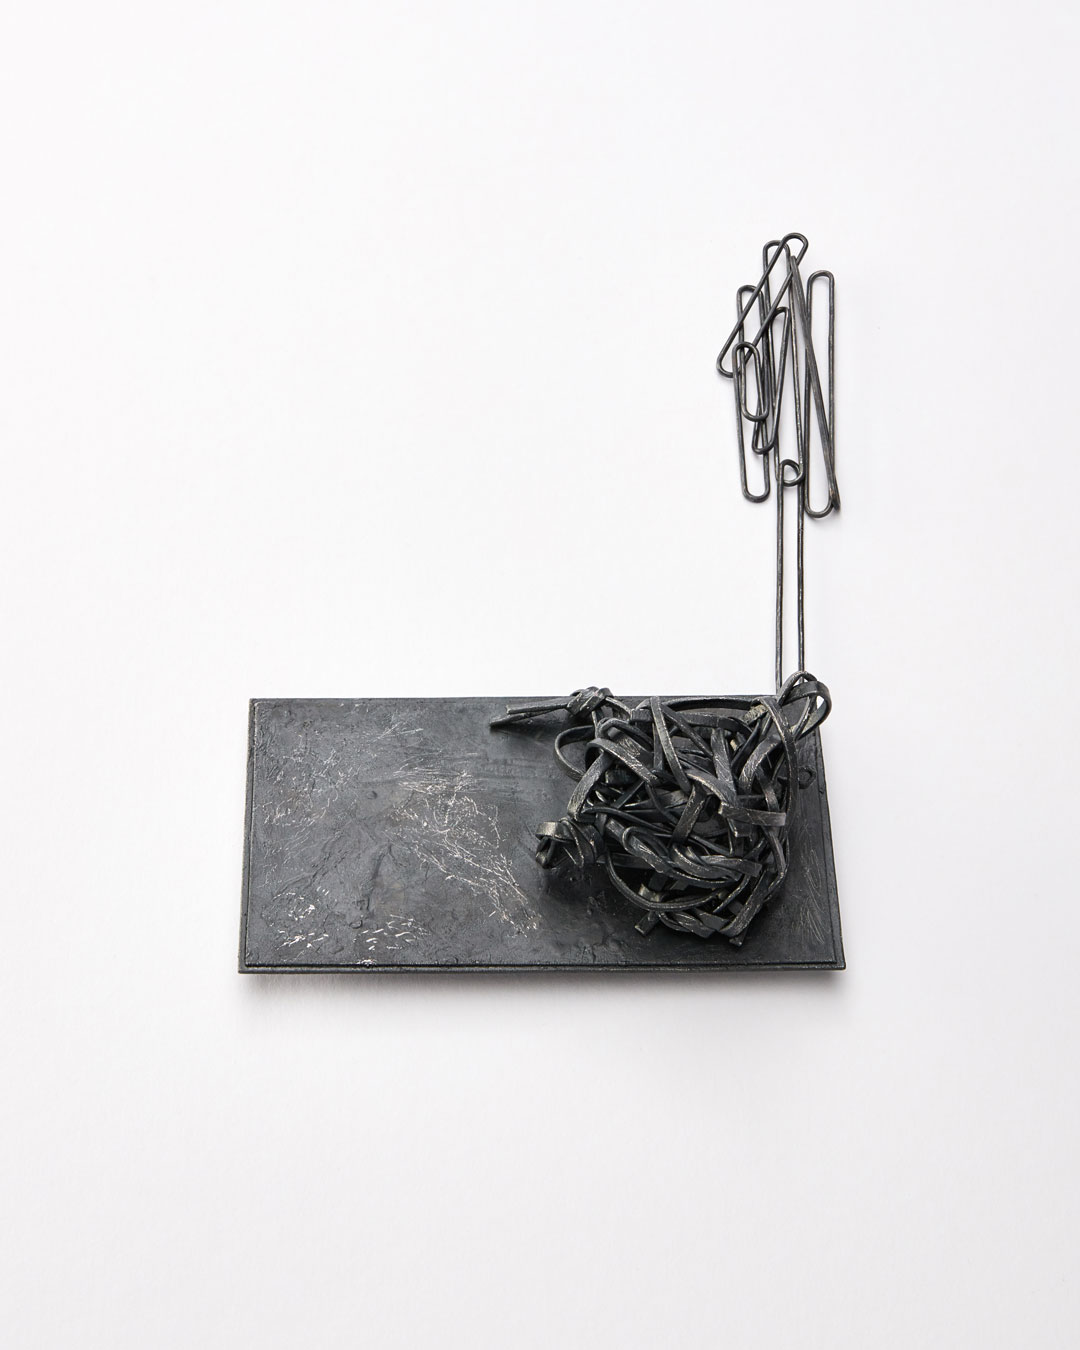 Iris Bodemer, Gegenüberstellung 2 (Juxtaposition 2), 2019, pendant; silver, thermoplastic, 70 x 130 x 40 mm, €4000